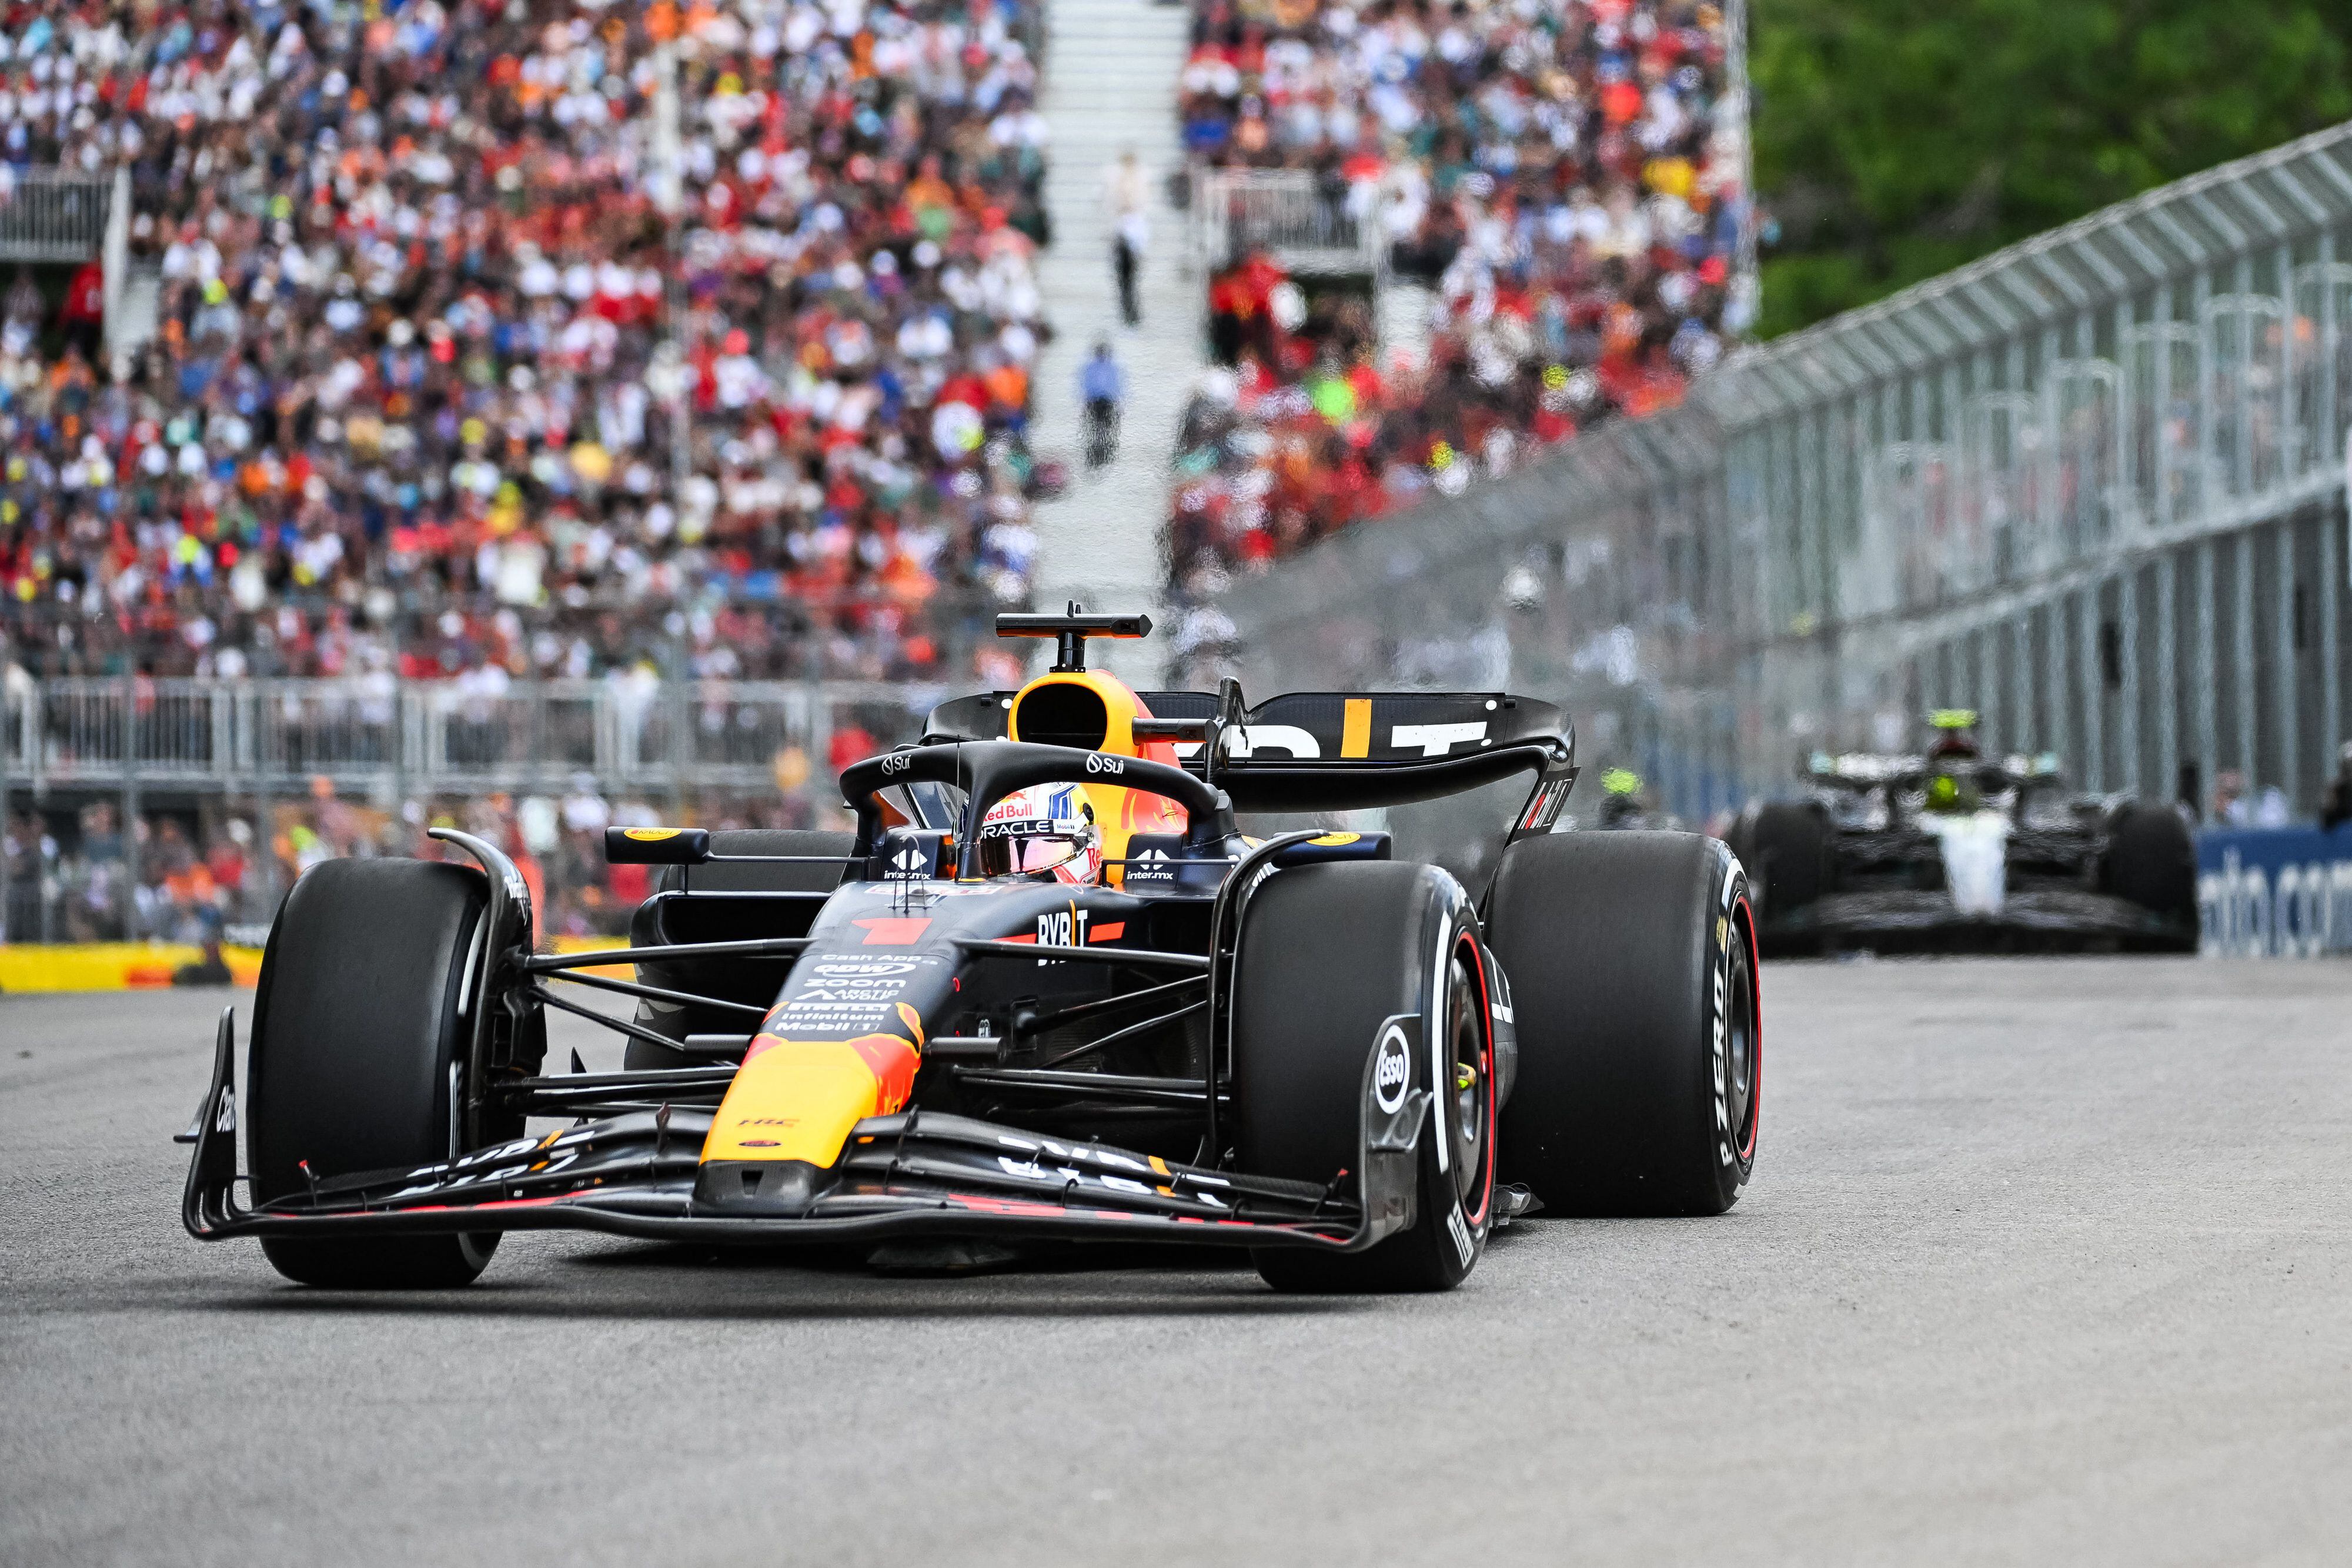 Verstappen duranta la carrera del GP de Canadá (REUTERS).